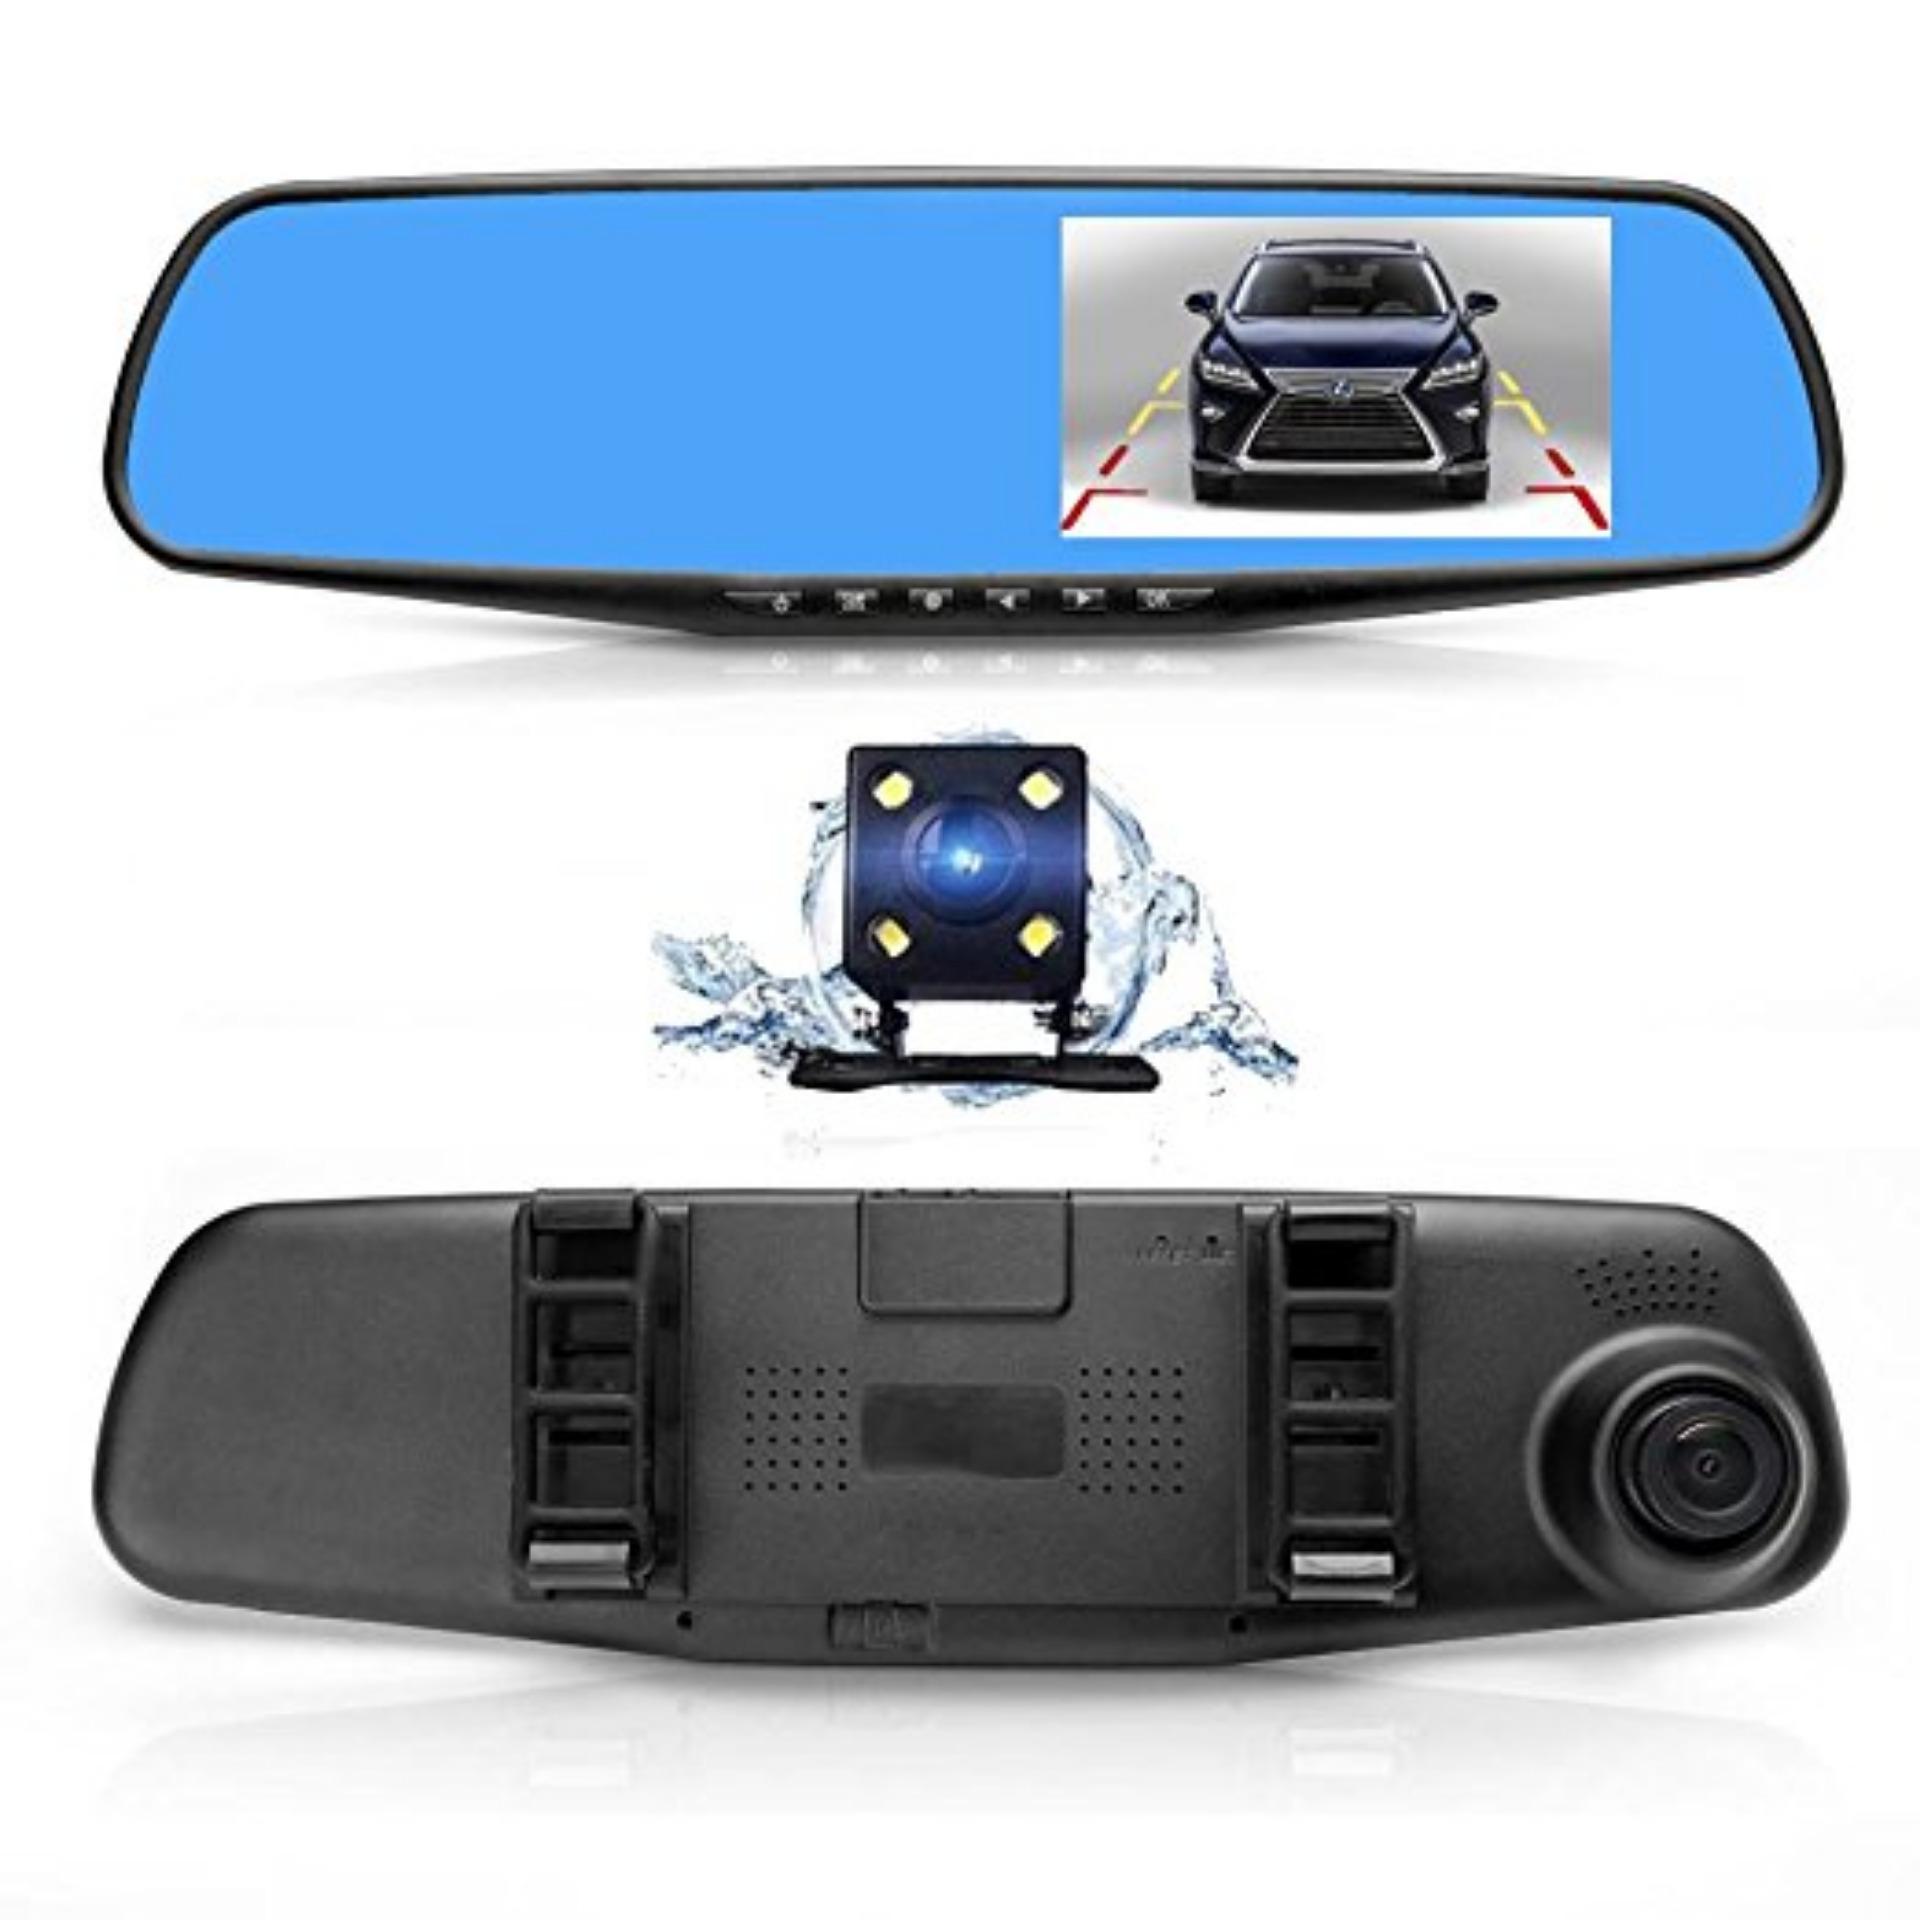 Oglinda Video auto dubla tip Oglinda Blackbox™, HD 1080p, Display 4,3", Mod Parcare, G Senzor, Detectie Miscare, Unghi larg filmare, AV, cadou personalizat by Urban Trends ® eMAG.ro